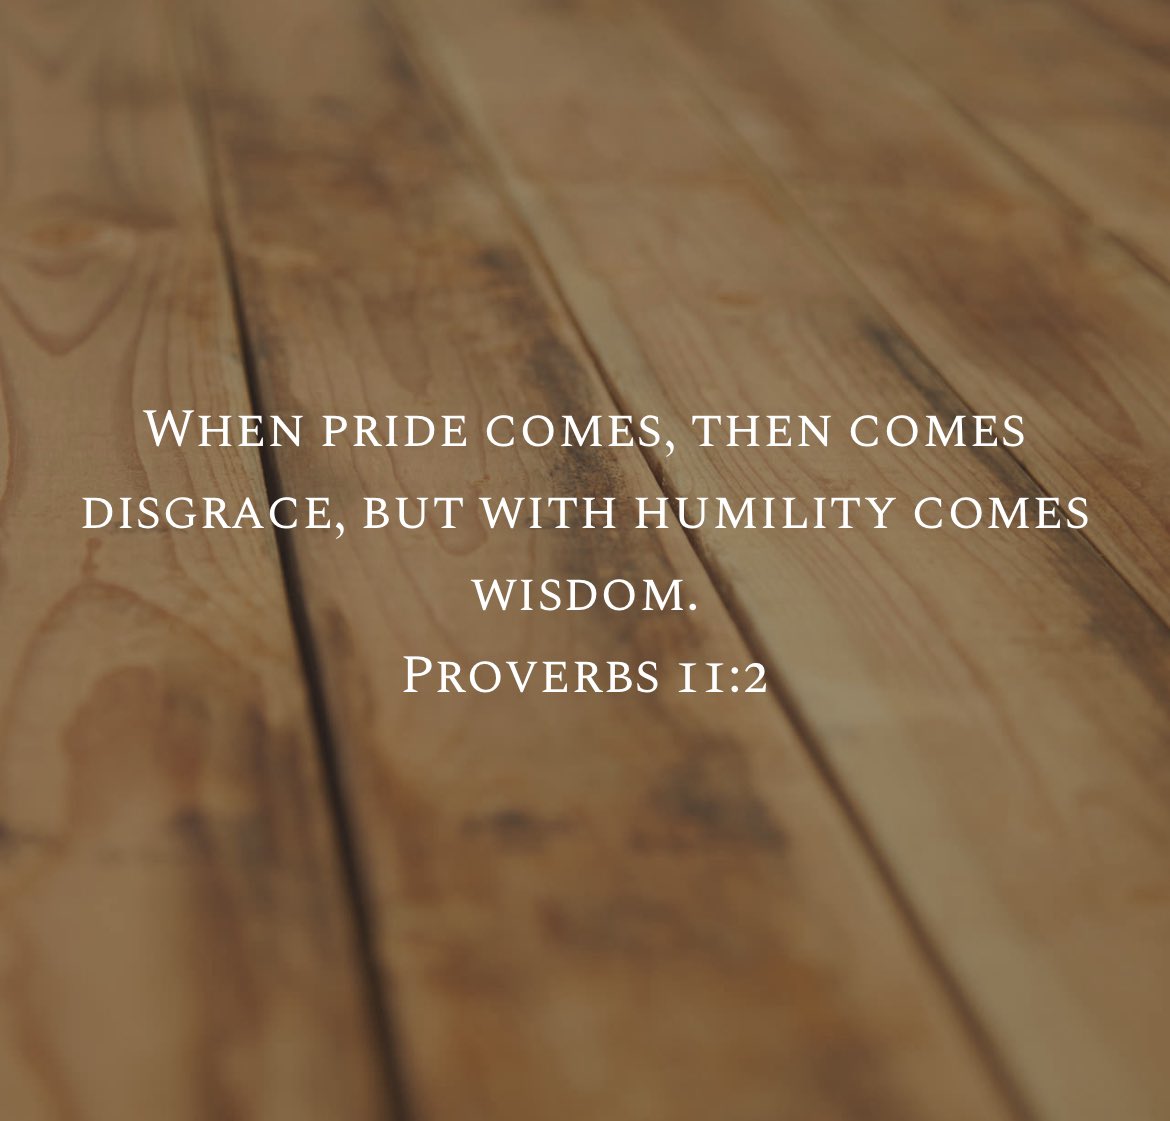 #Oneword 
Humility